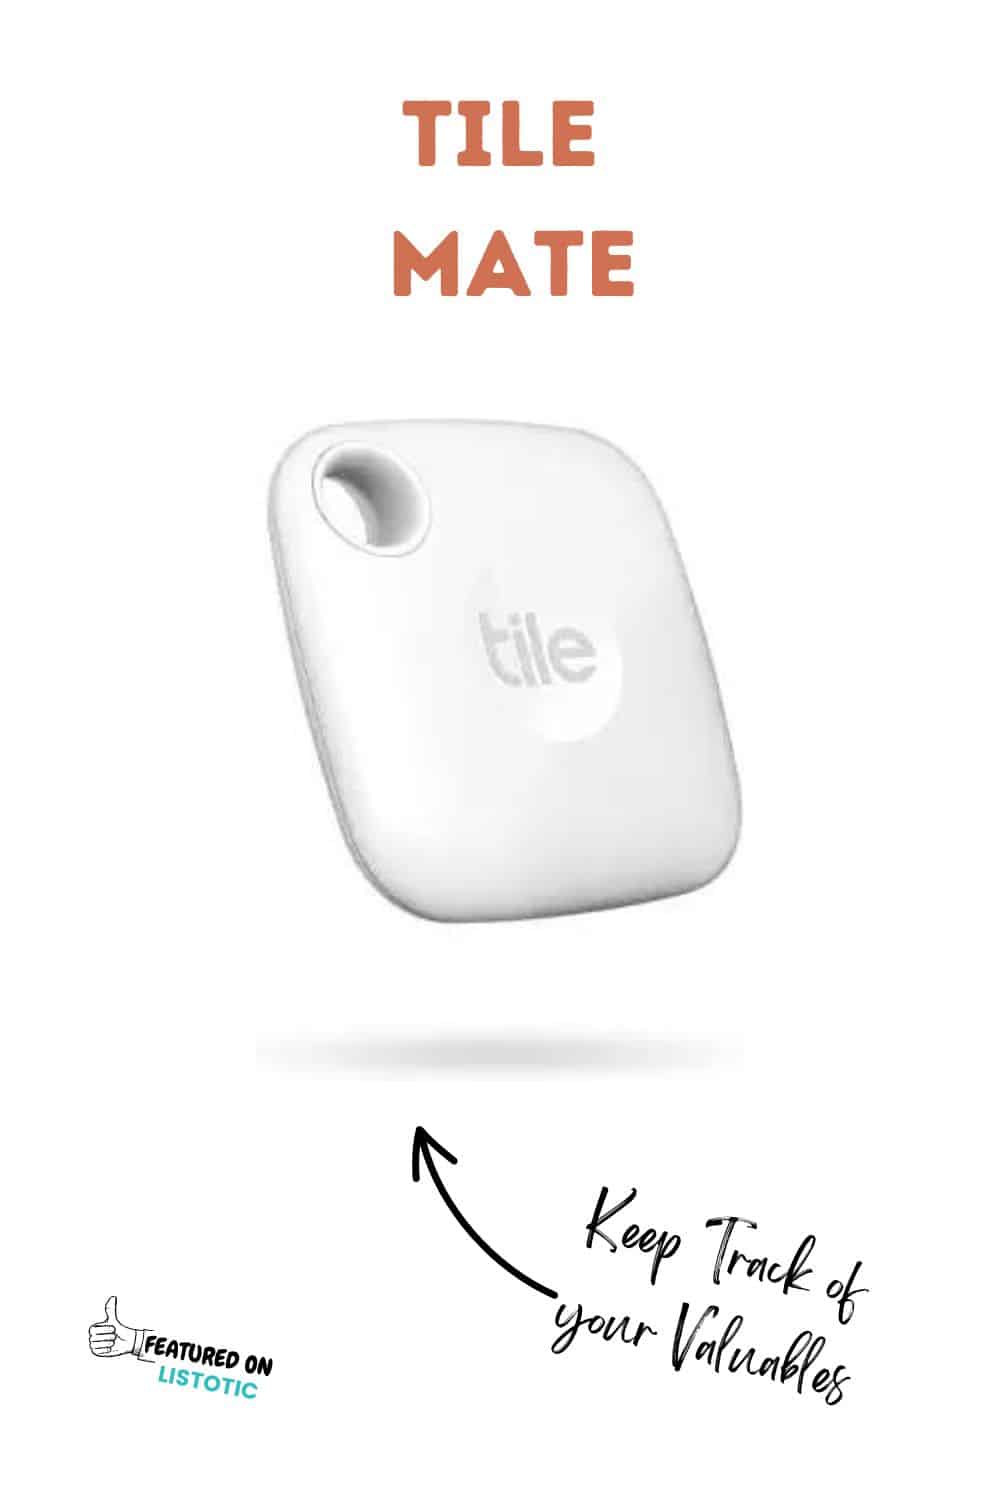 tile mate travel accessory